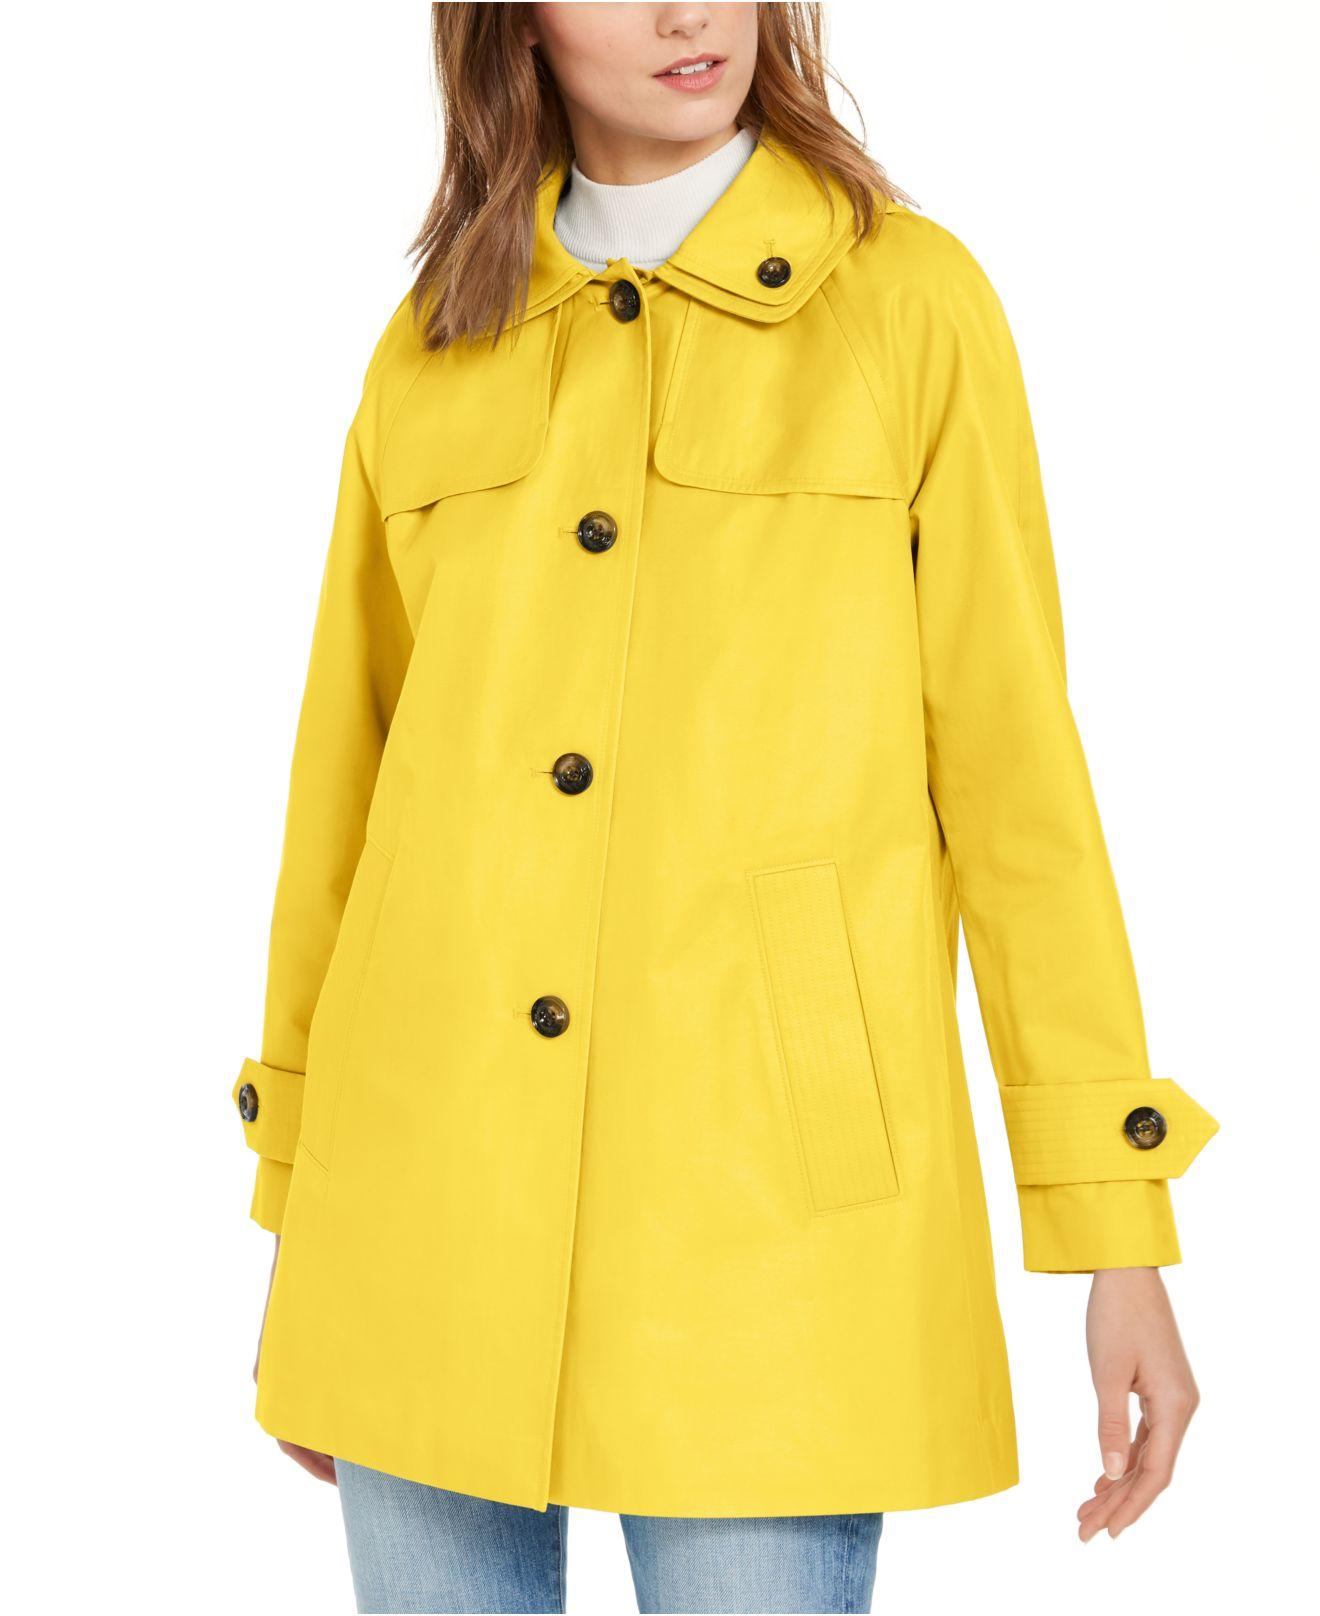 London Fog Cotton Hooded Water-resistant Raincoat in Lemon (Yellow) - Lyst